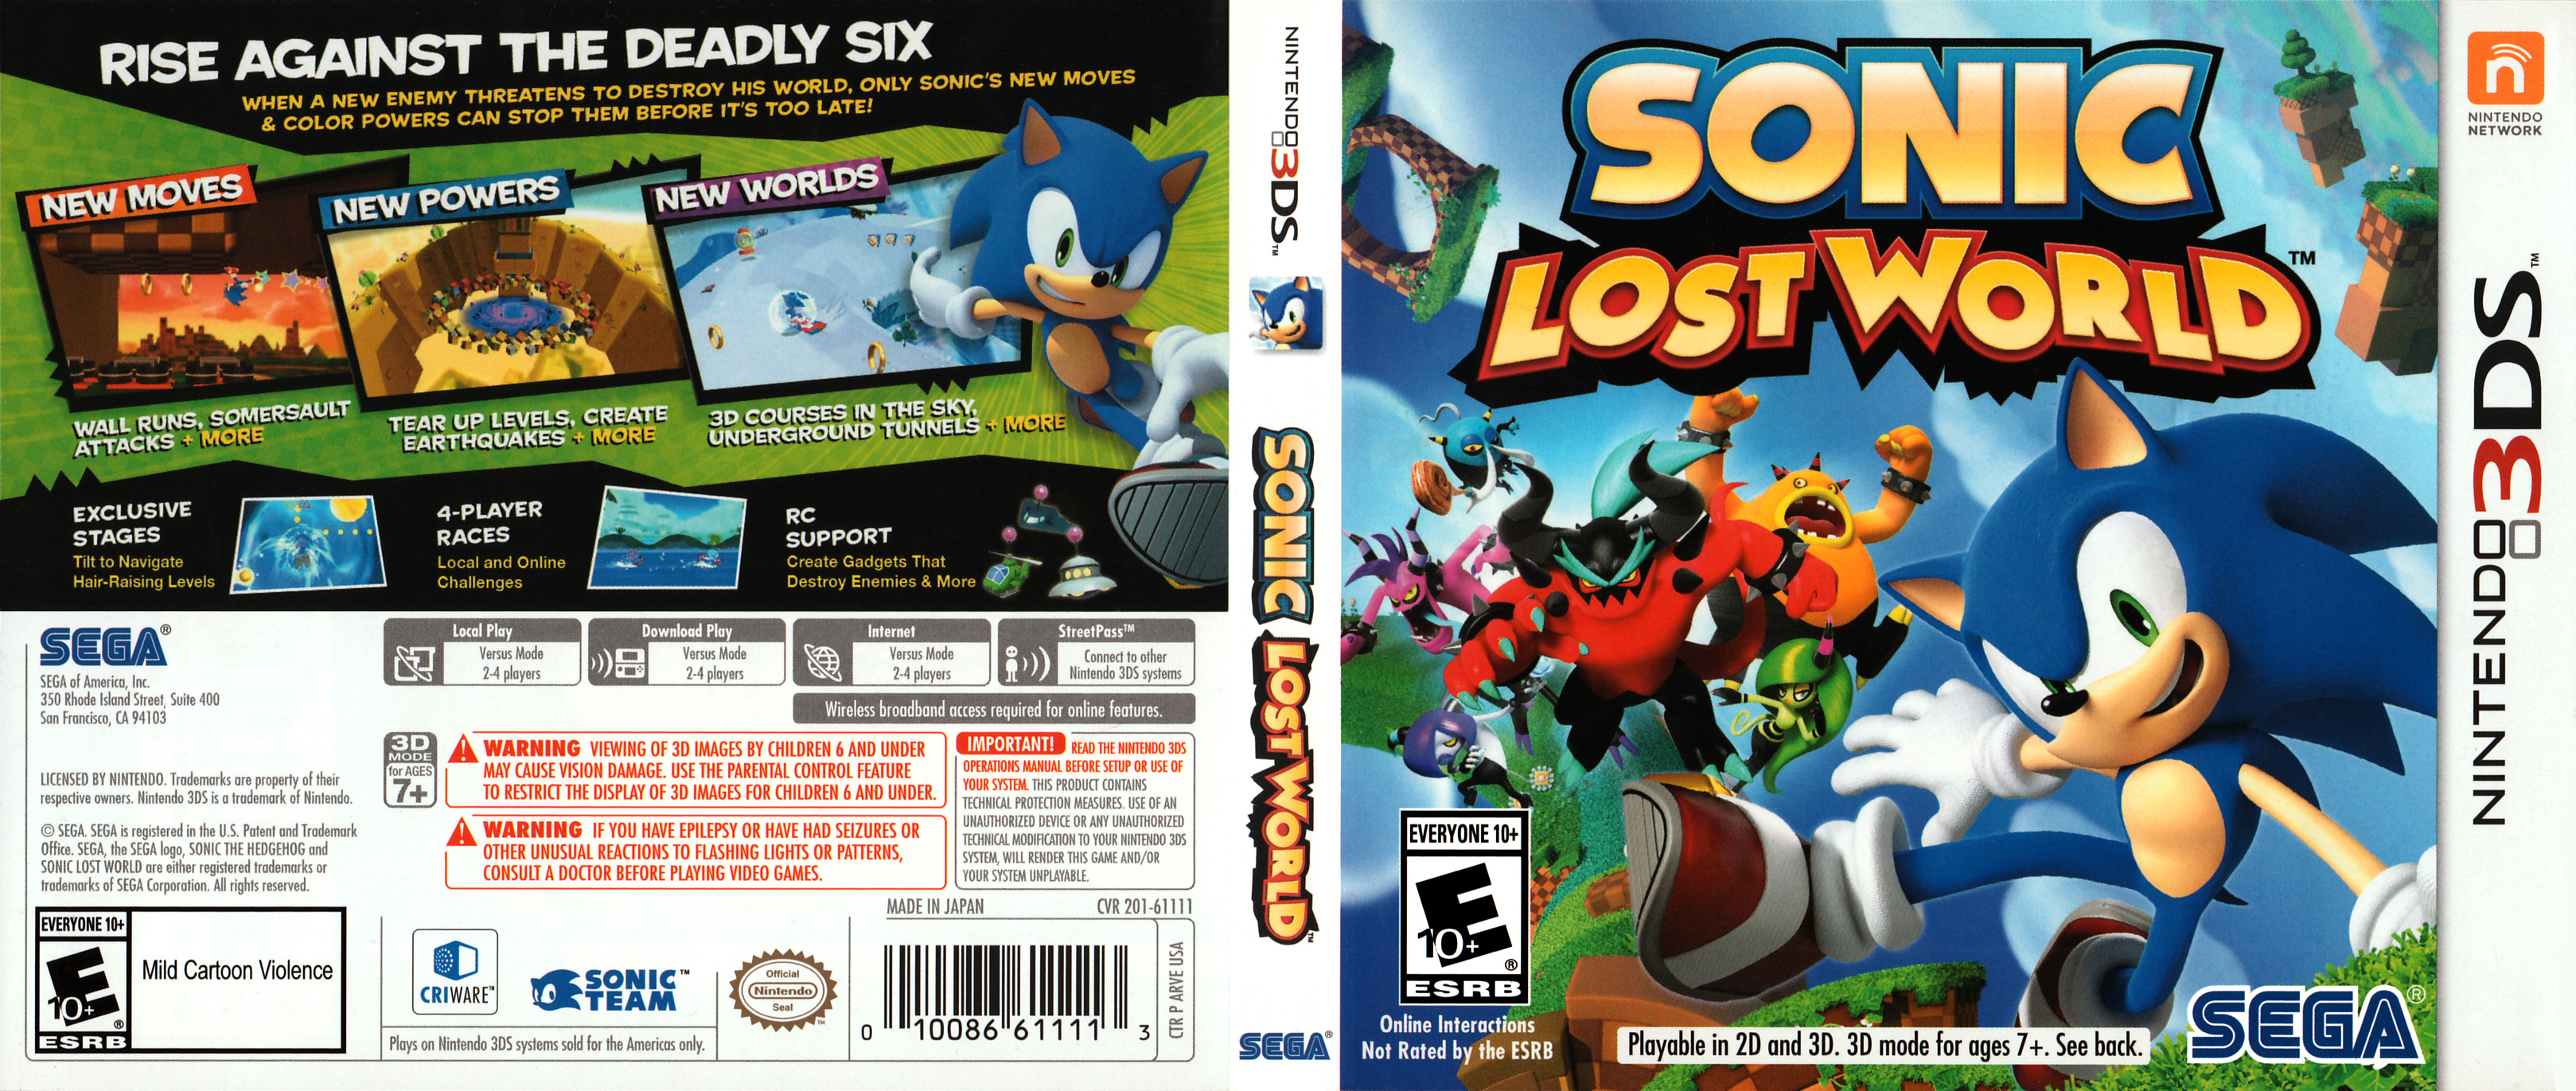 SonicLostWorld_3DS_US_BoxArt.jpg